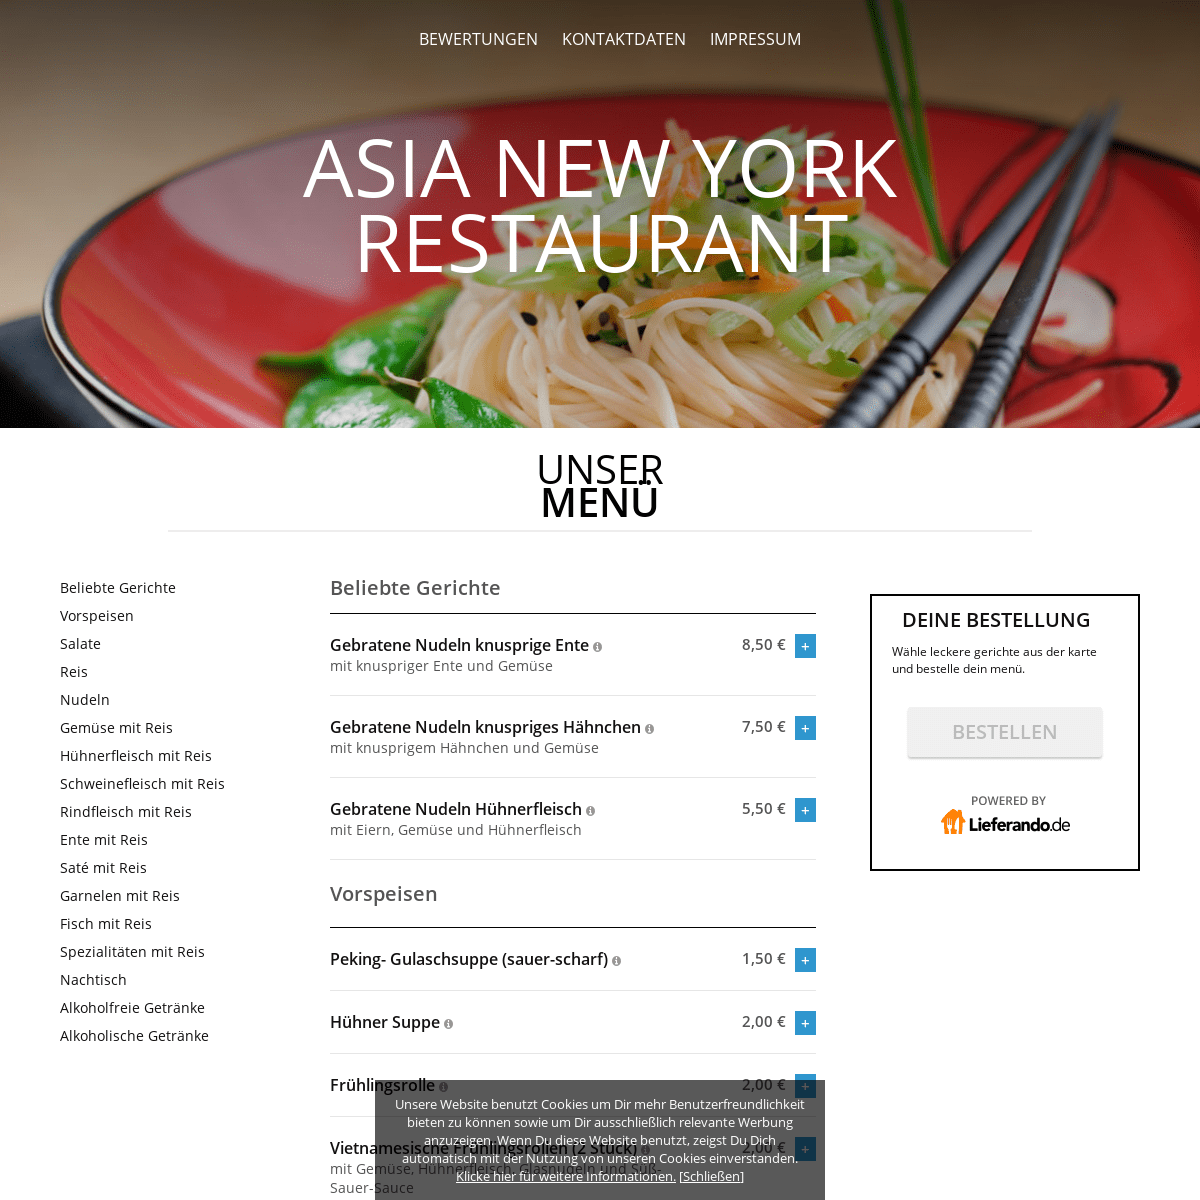 A complete backup of asia-new-york-restaurant.de